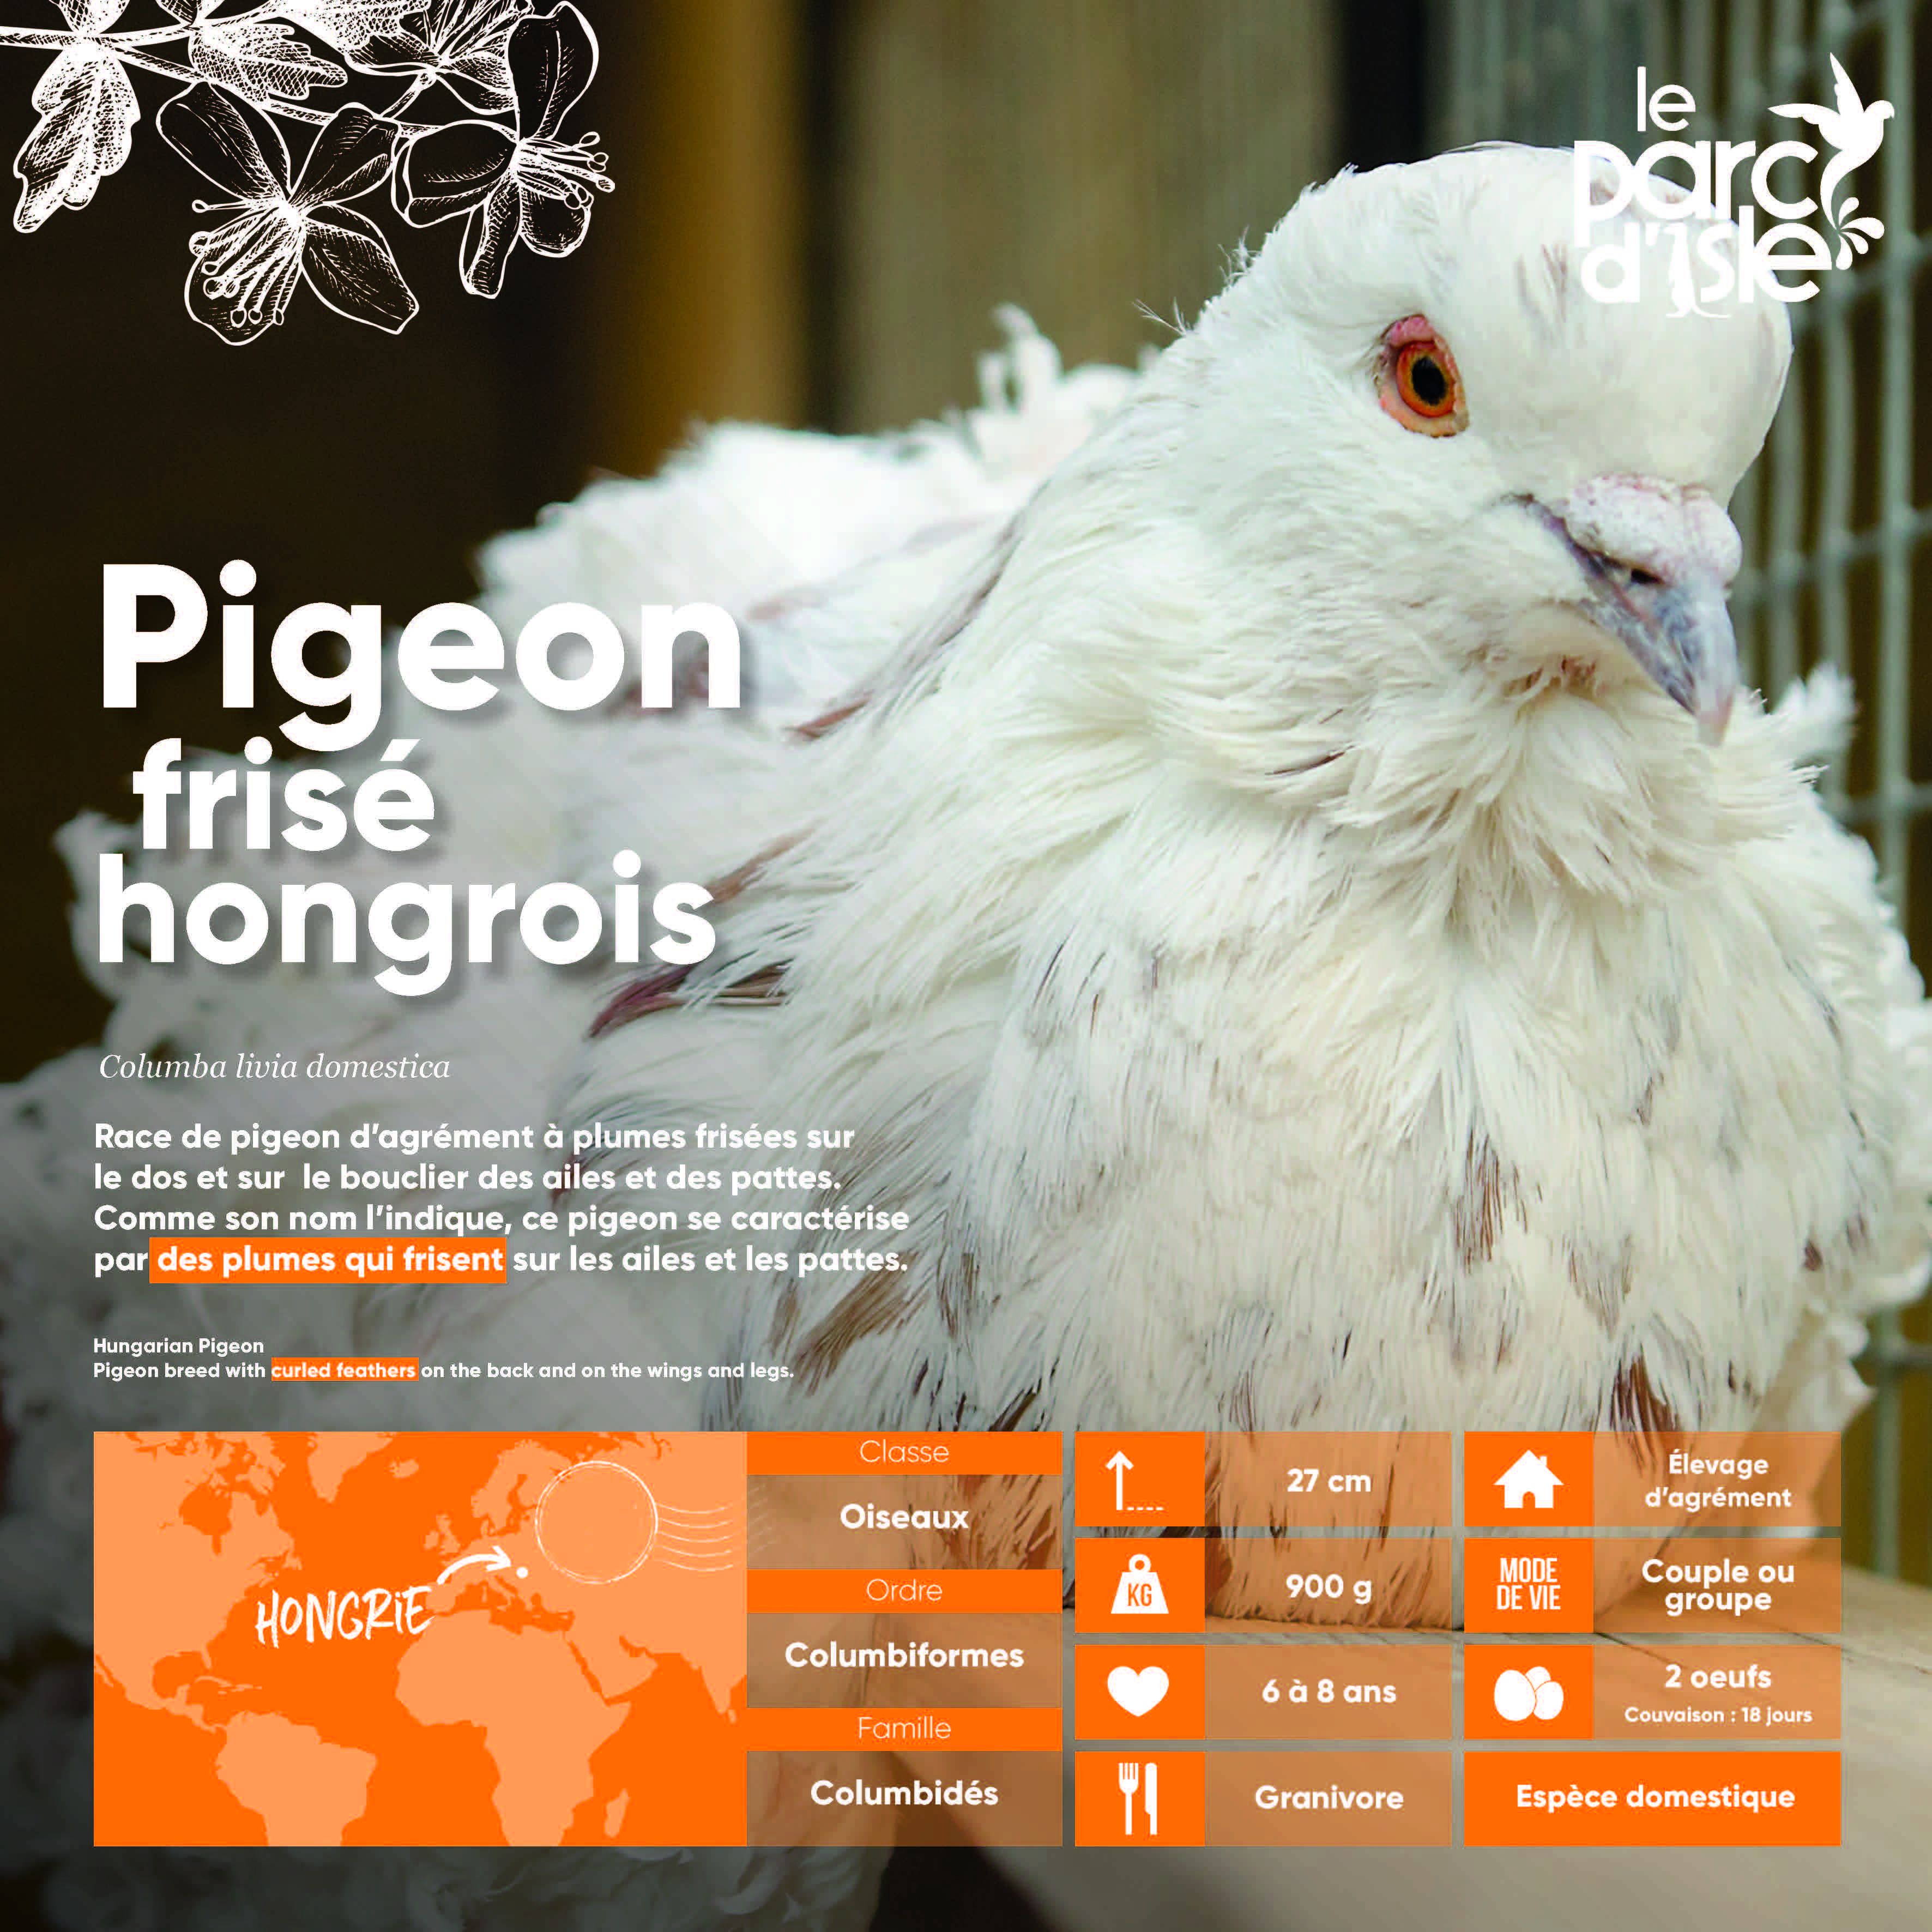 Pigeon frisé hongrois - Agrandir l'image, .JPG 816Ko (fenêtre modale)